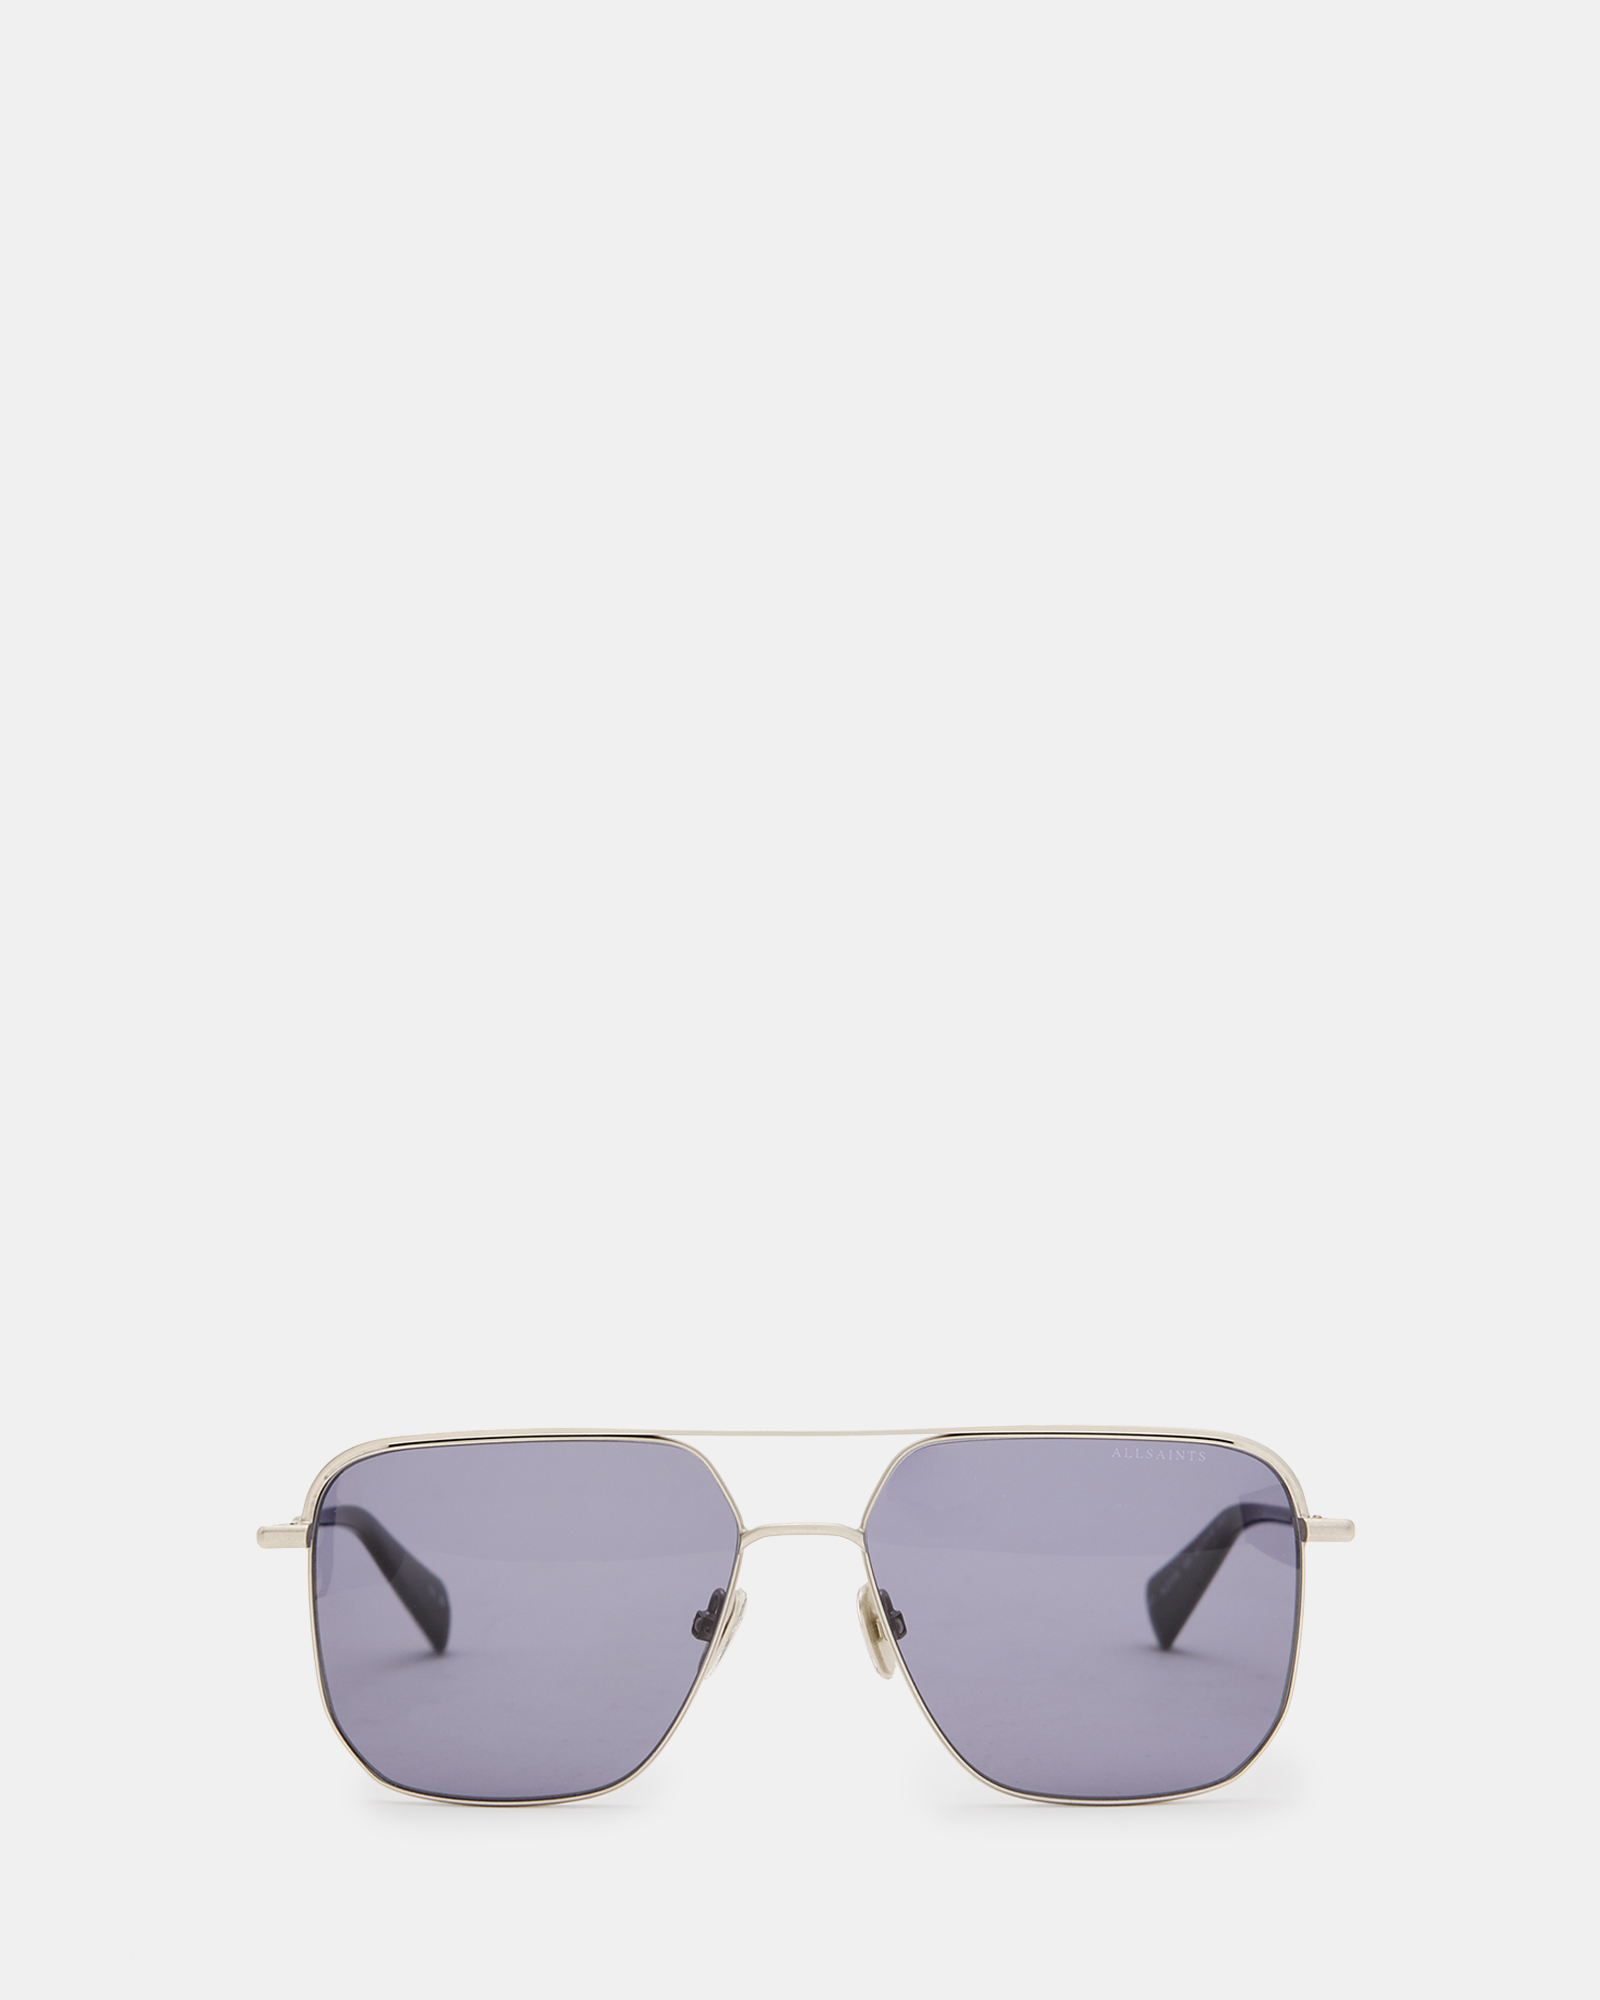 AllSaints Swift Navigator Sunglasses